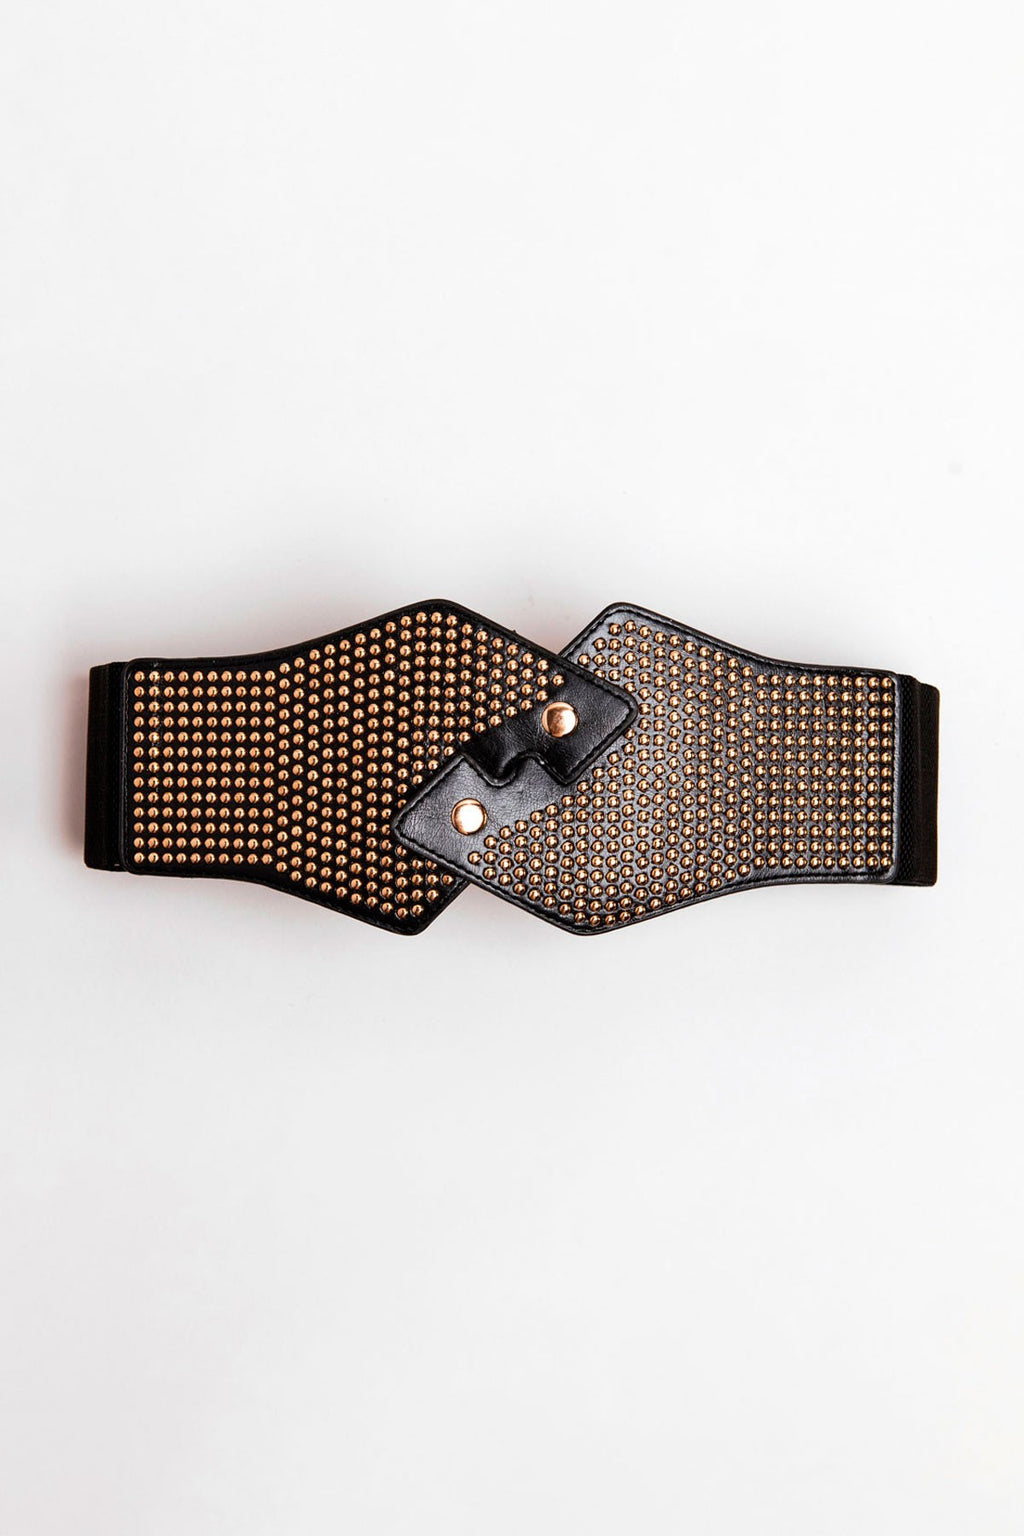 Elasticated belt with hook fastening.